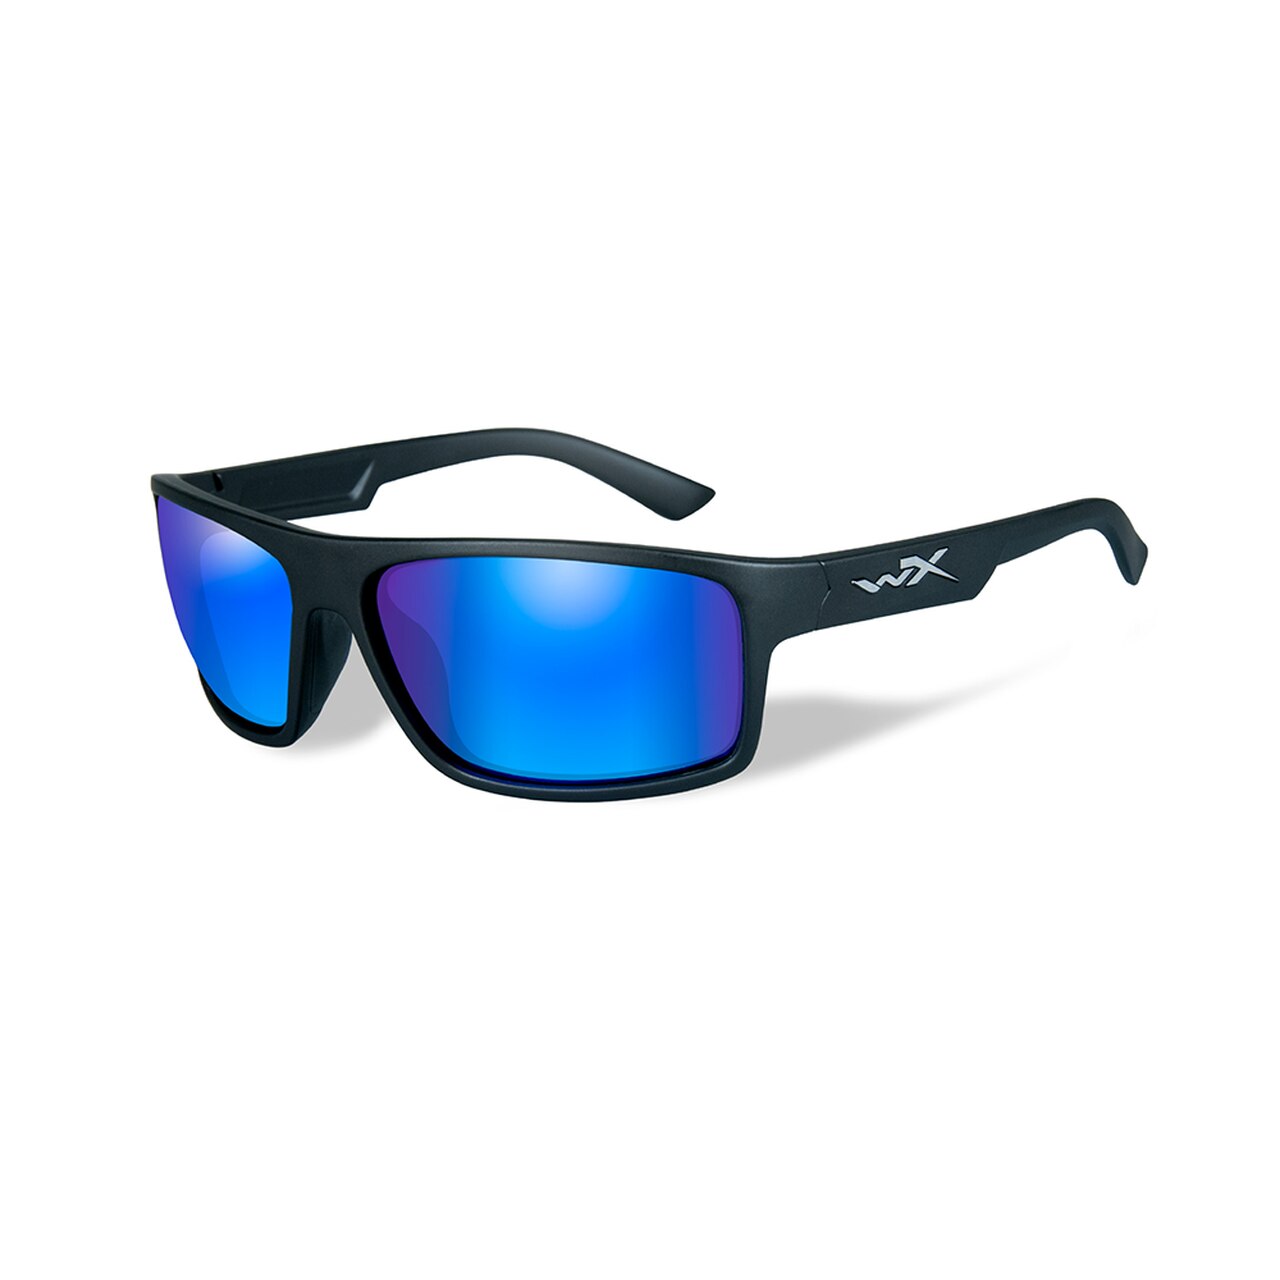 Wiley X Peak Sunglasses Polarised Blue Mirror Lens Matte Black Frame Tactical Distributors Ltd New Zealand